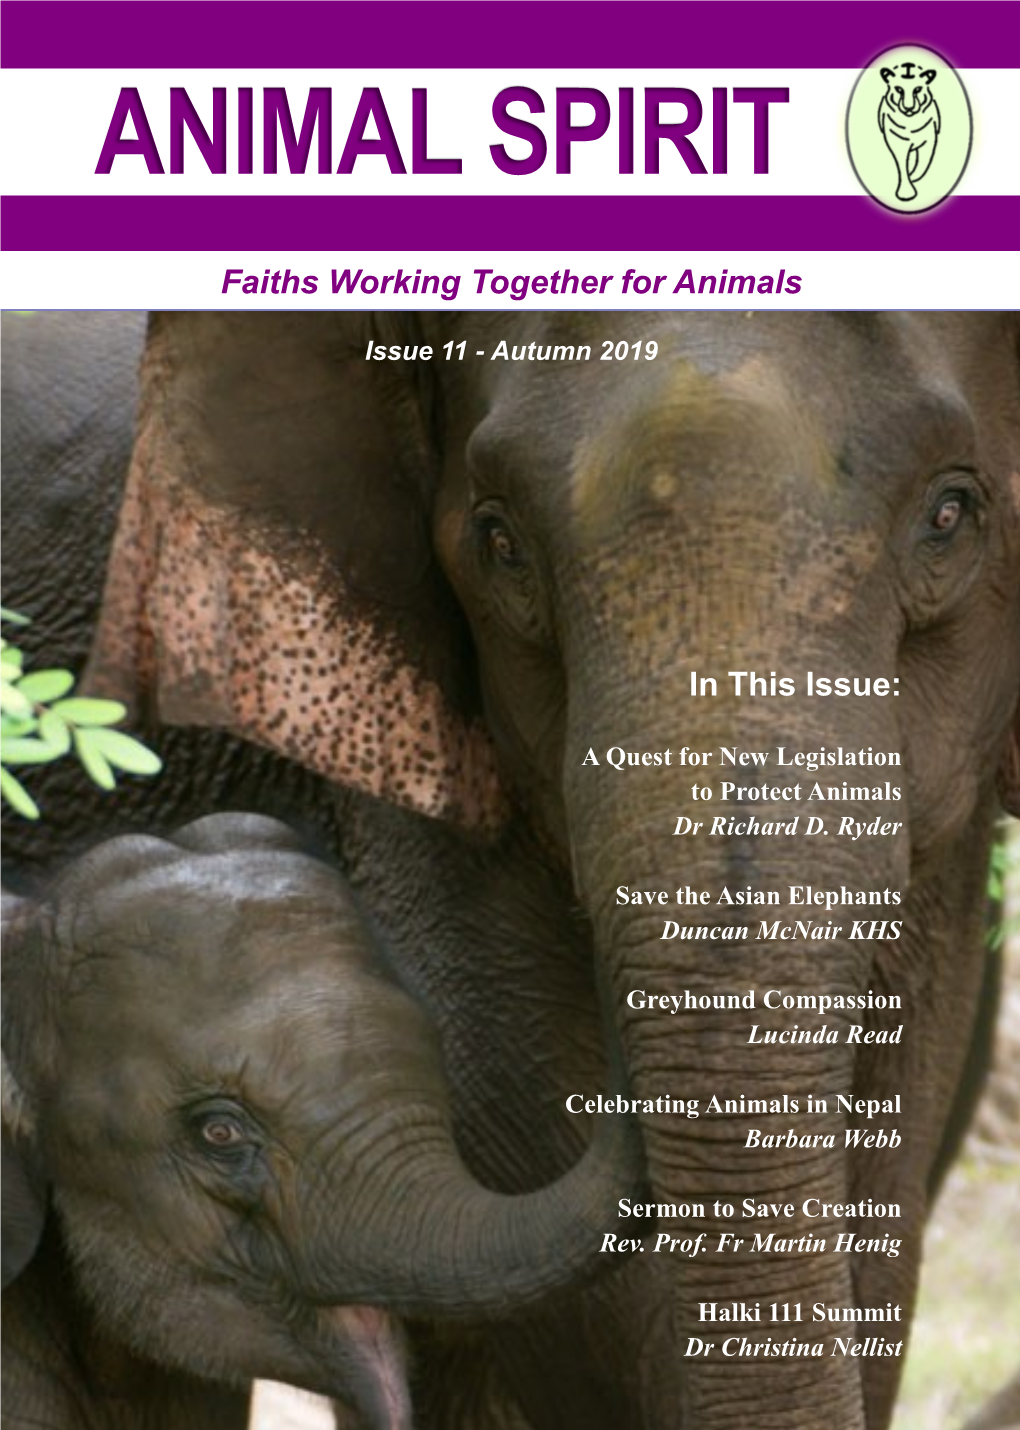 ANIMAL SPIRIT the Animal Interfaith Alliance Magazine Spring 2018 - Issue 8